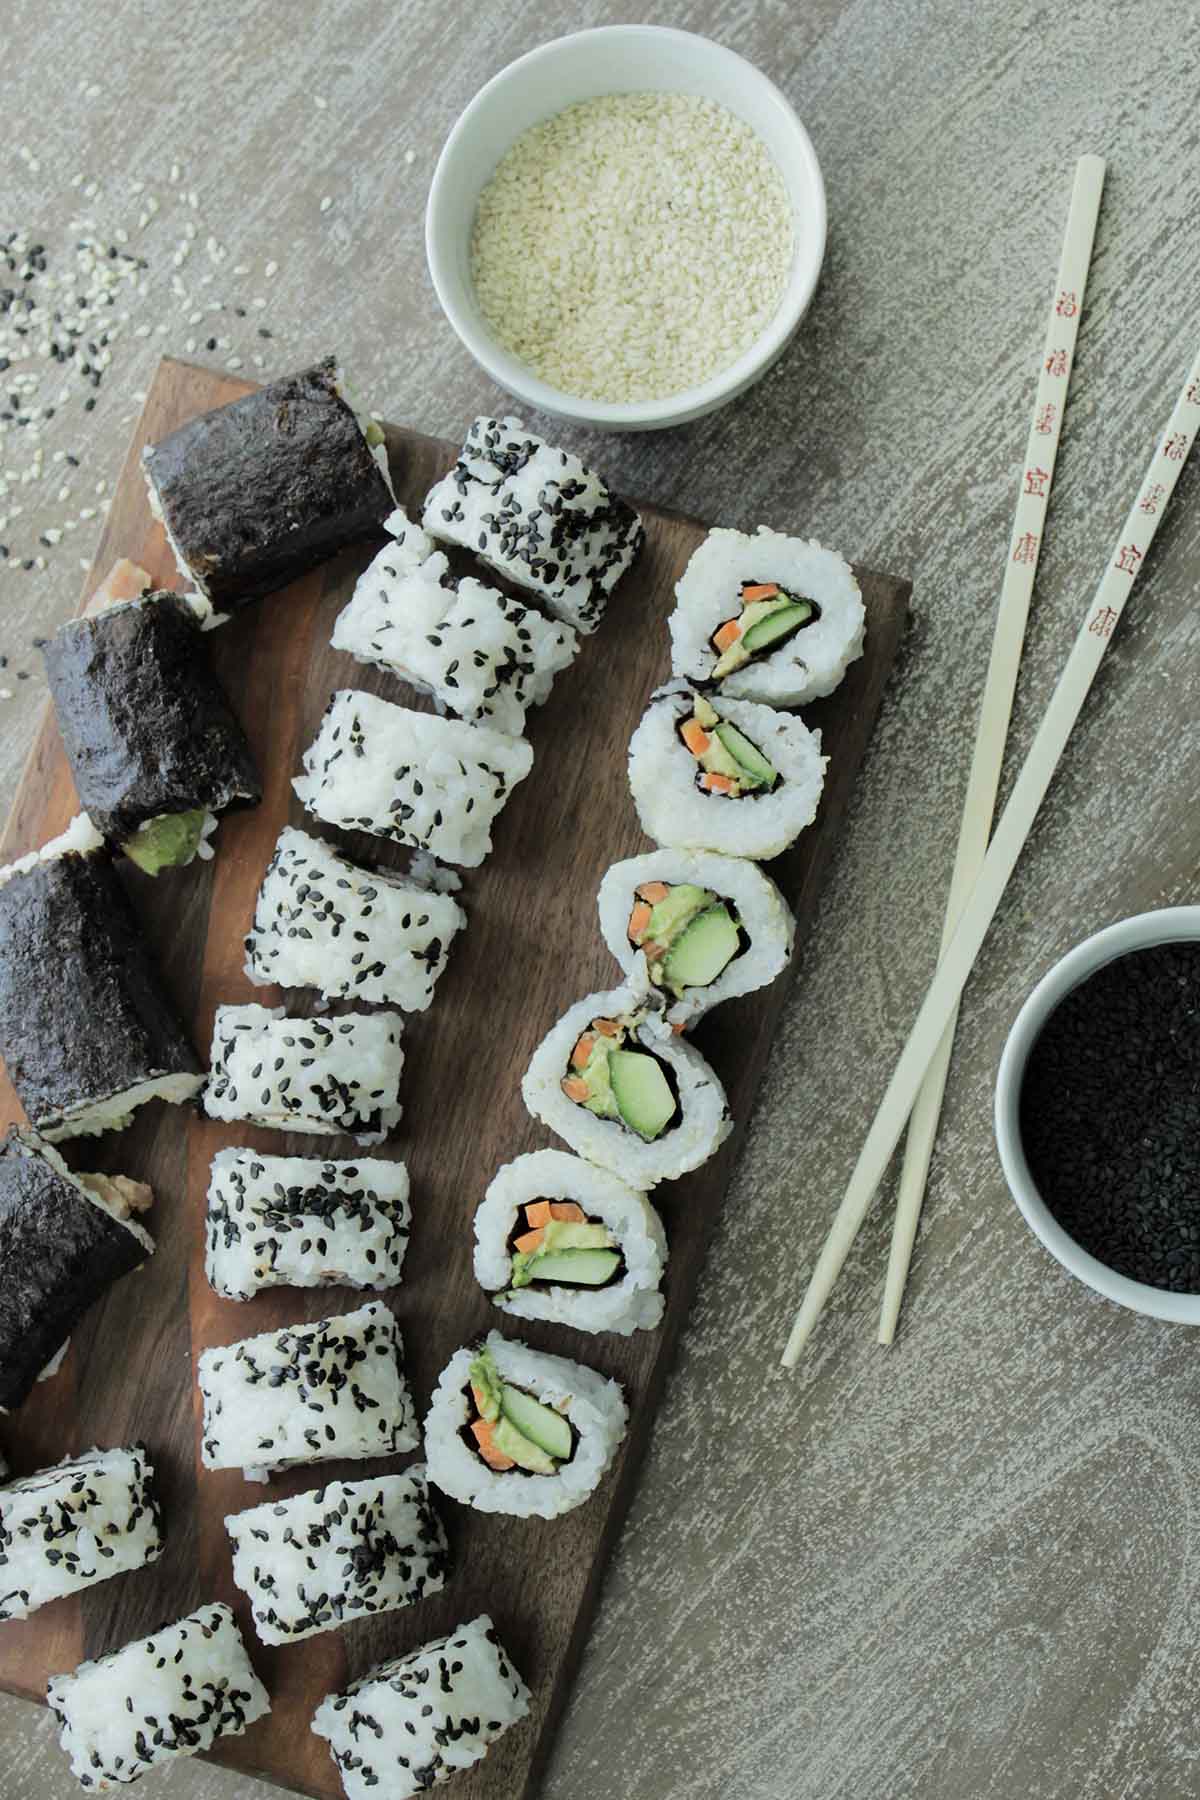 sushi rolls next to chopsticks and sesame seeds.